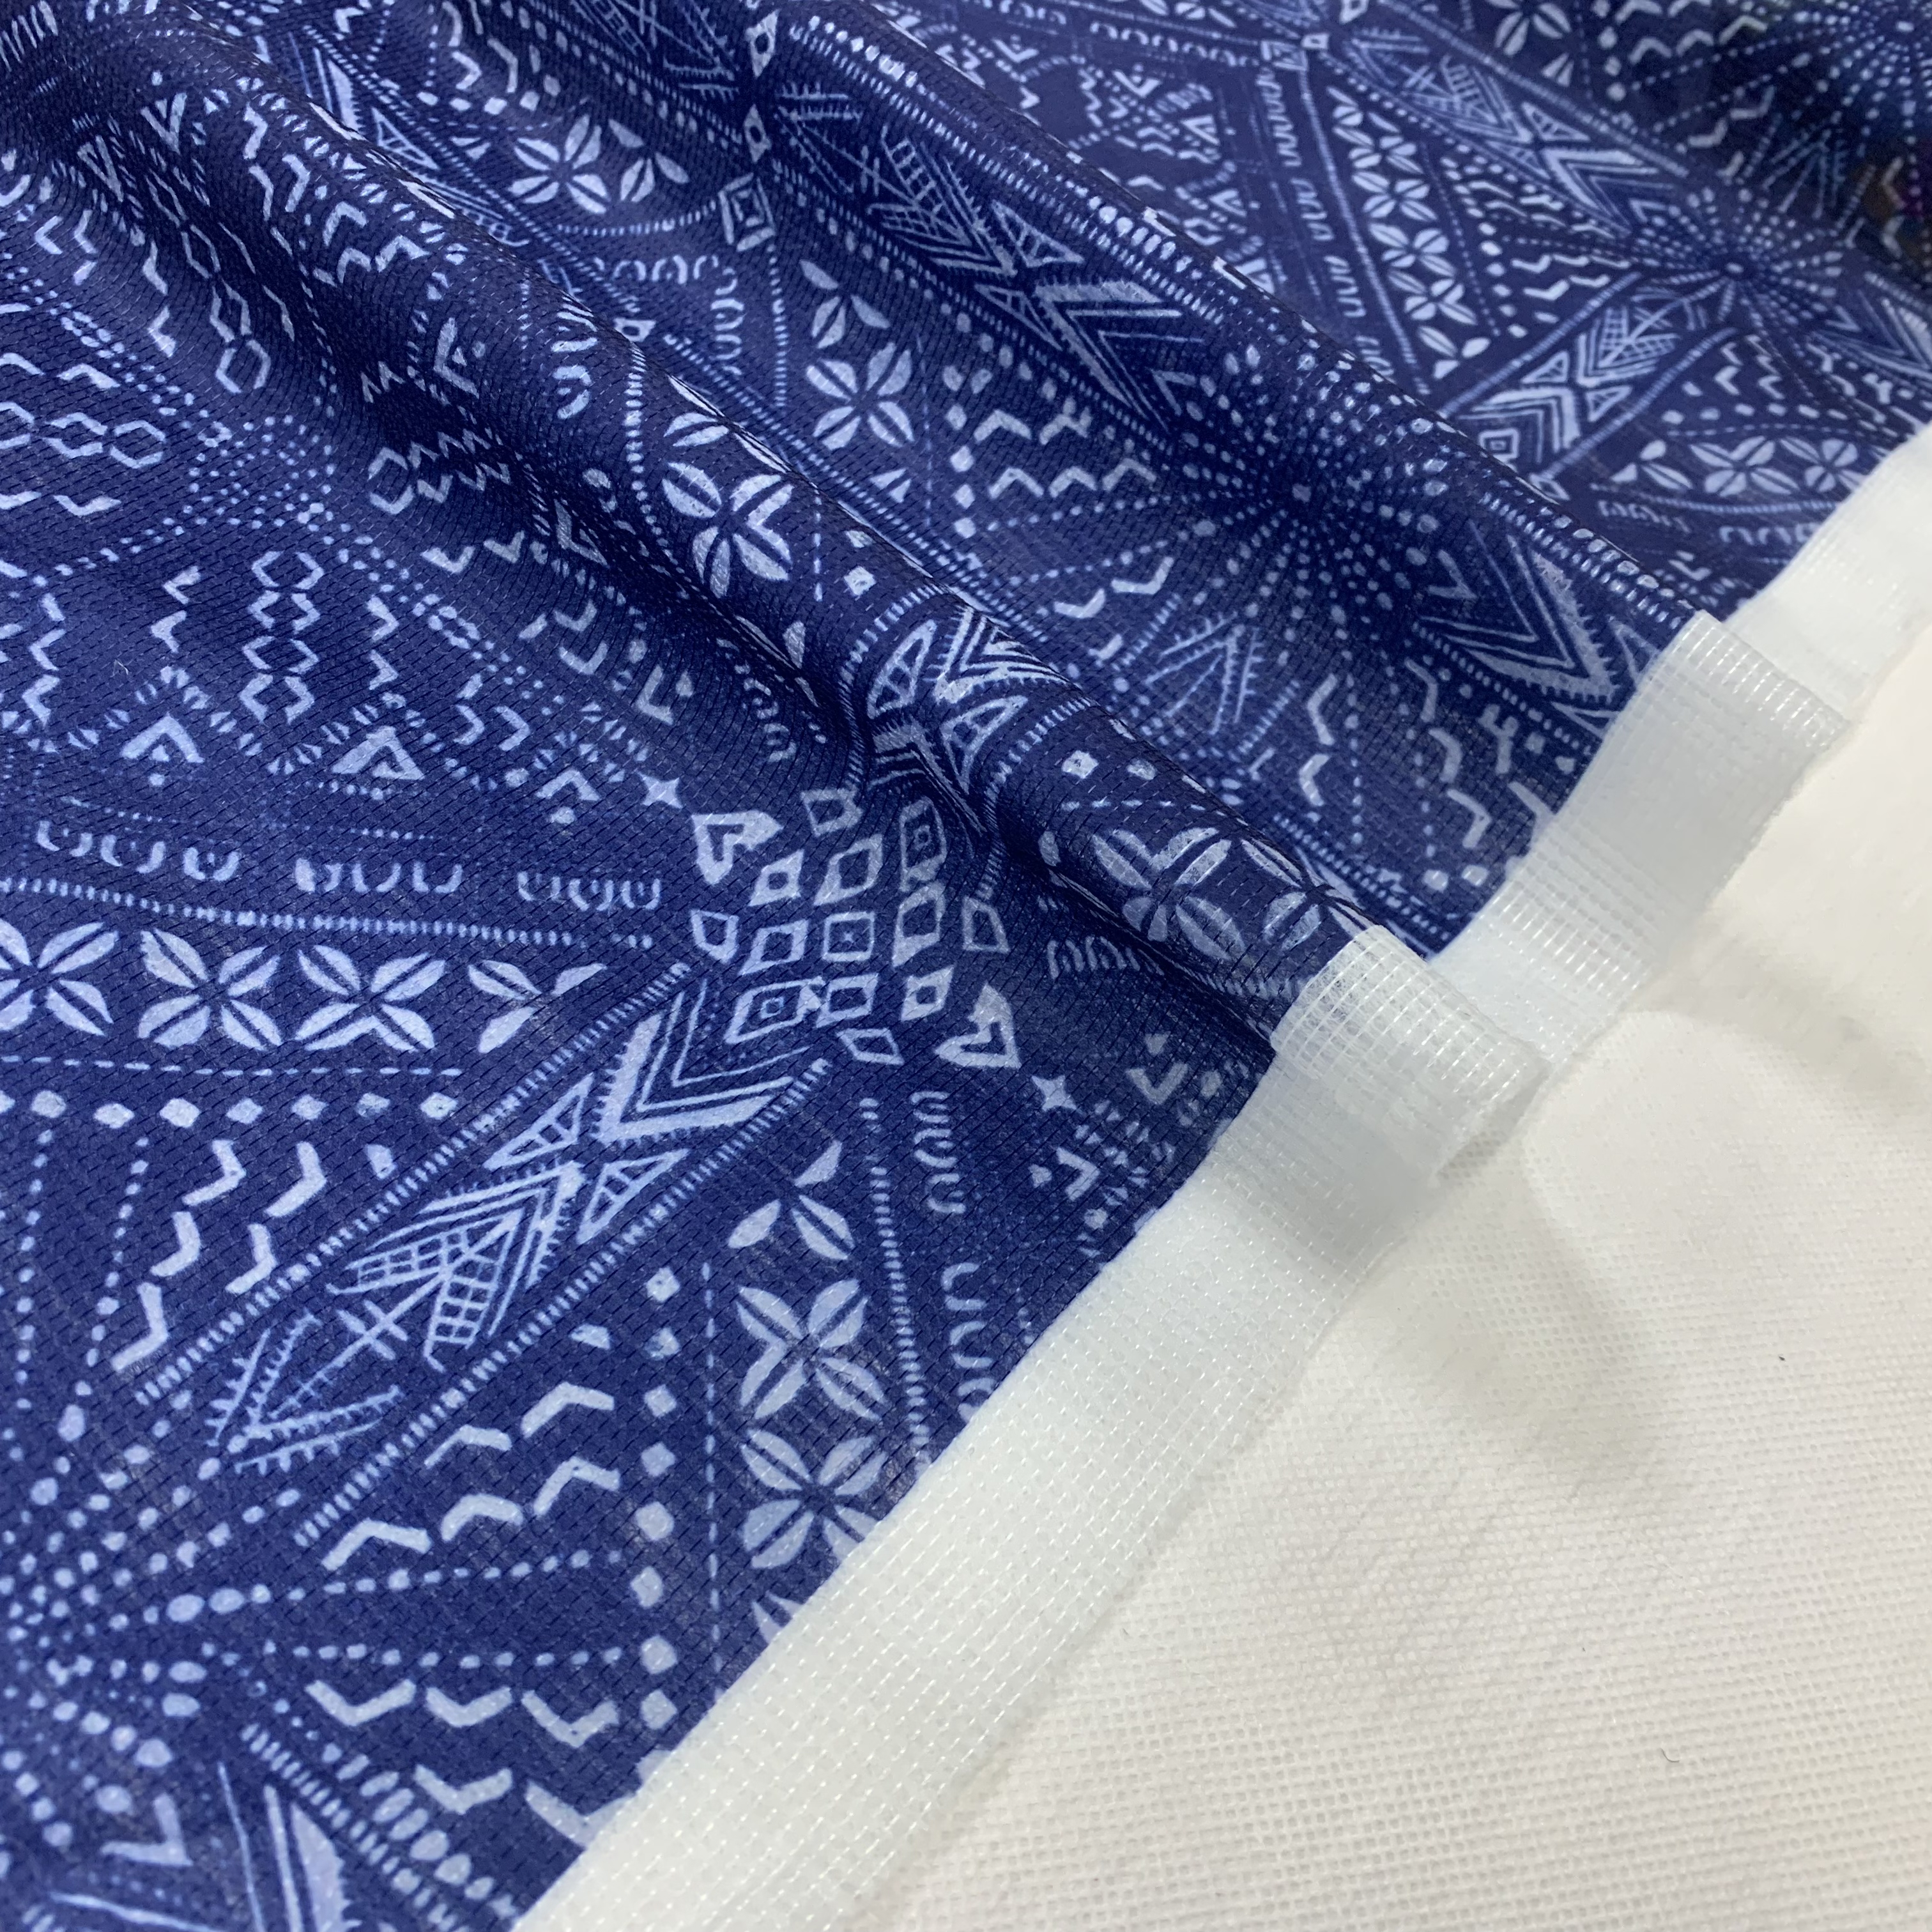 Polyester Stitchbond nonwoven non-woven fabric for nonwoven tablecloth/shopping bag